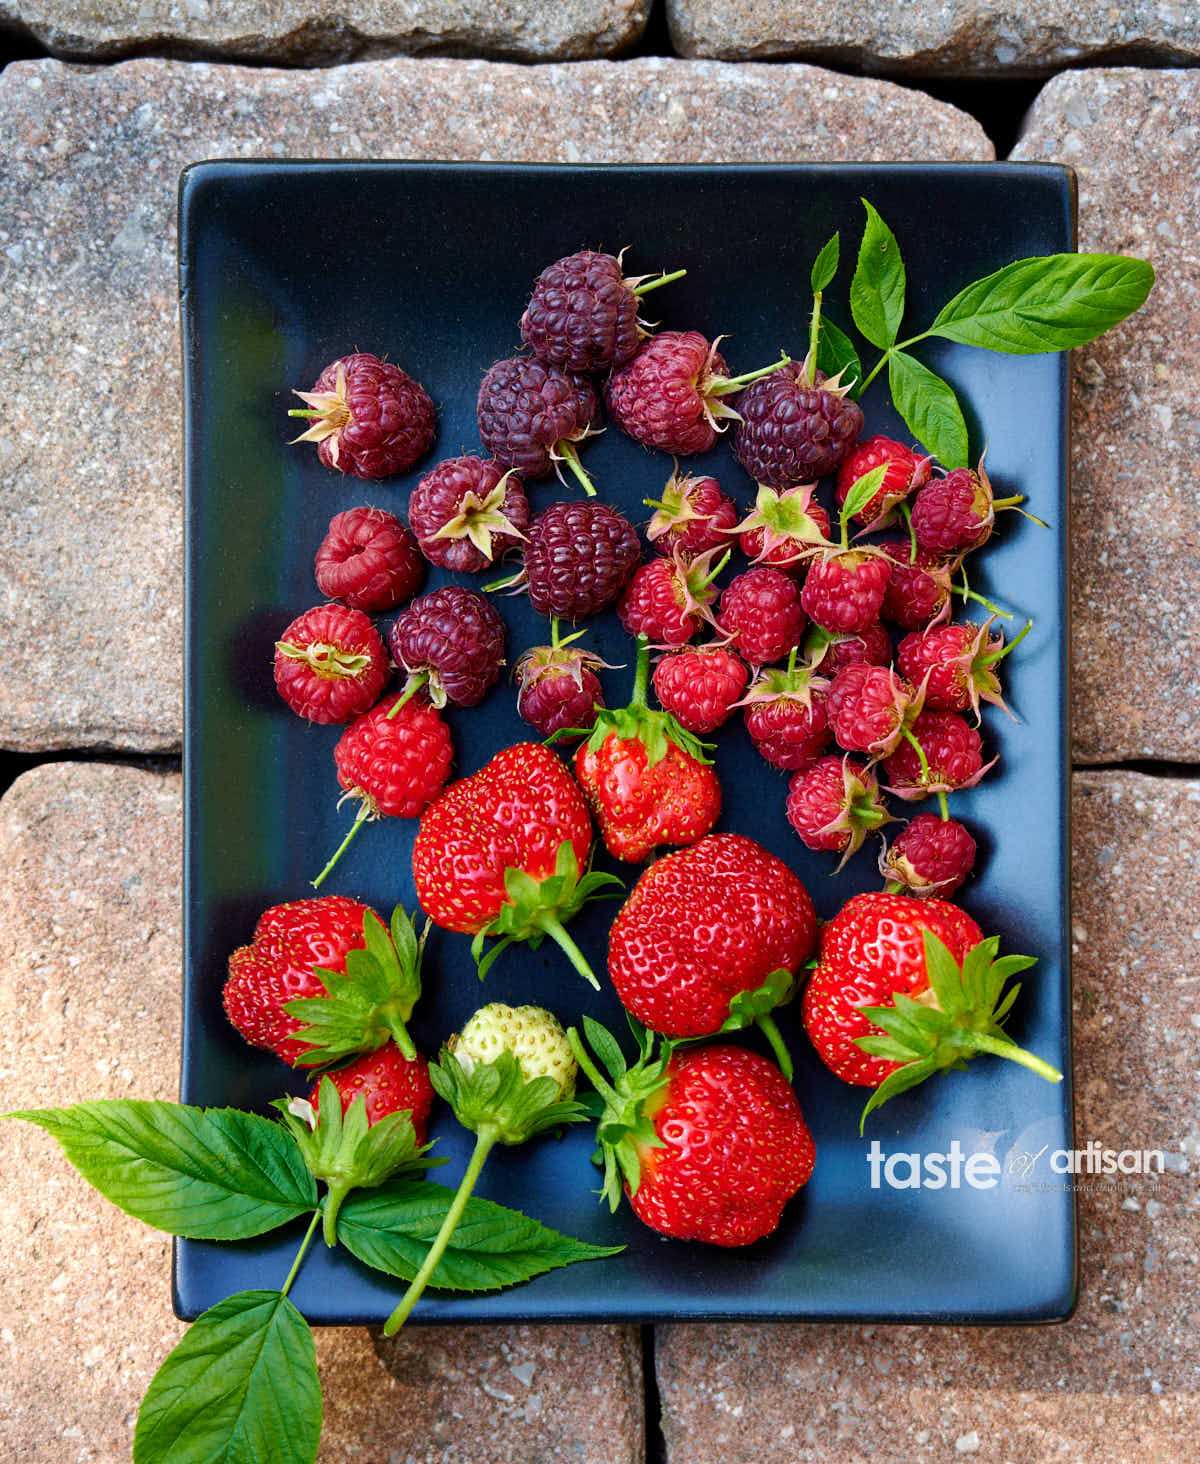 Fresh berries - raspberries and strawberries